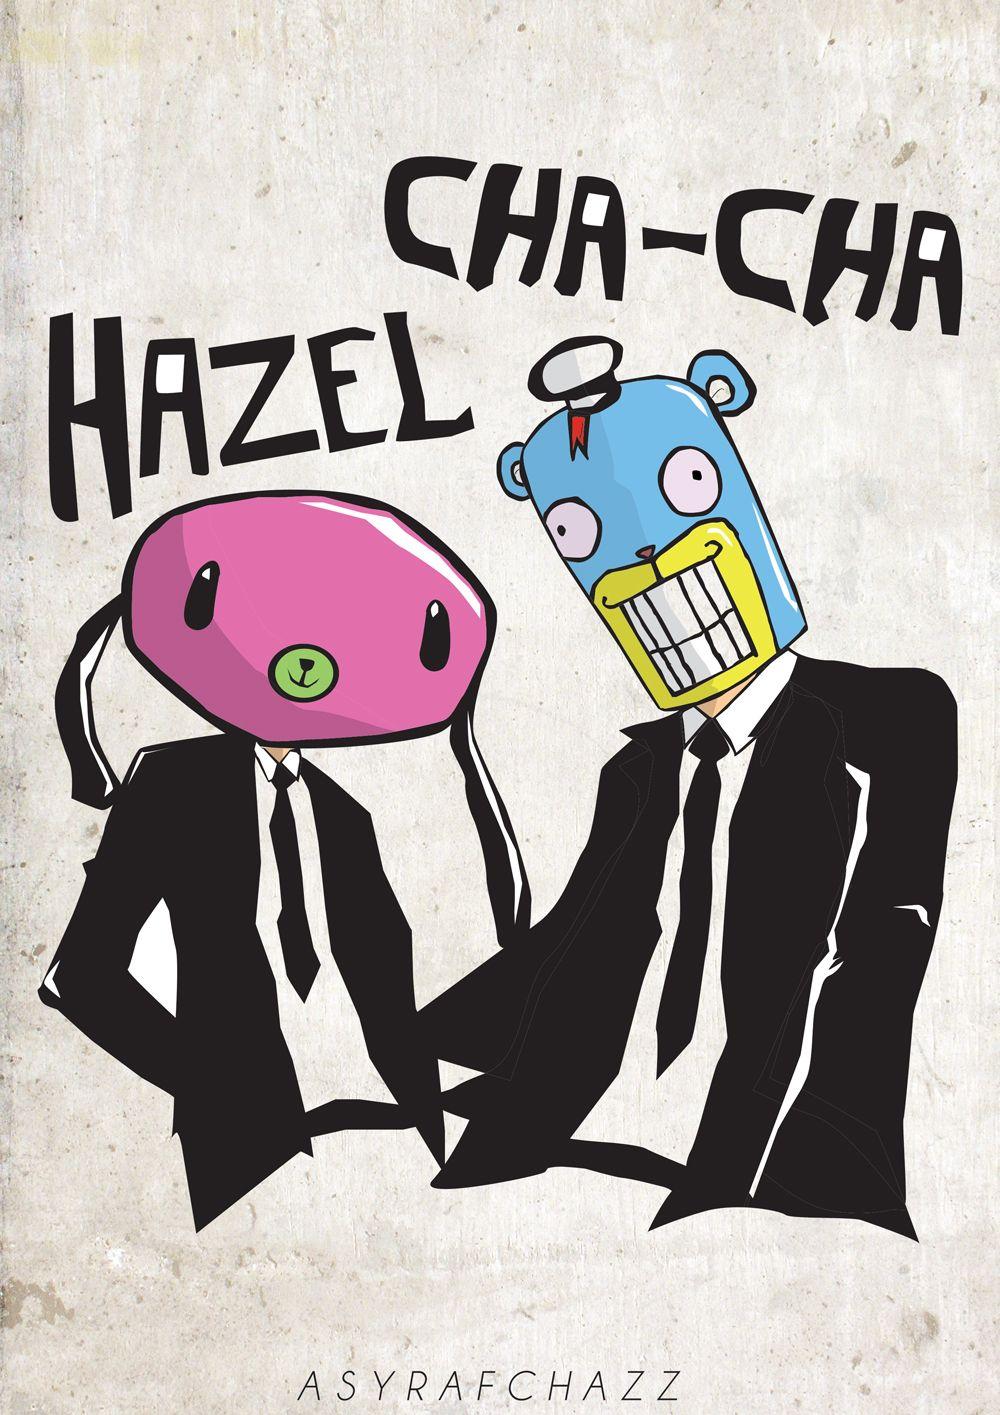 Hazel And Cha Cha From The Umbrella Academy. Design: Illustrations